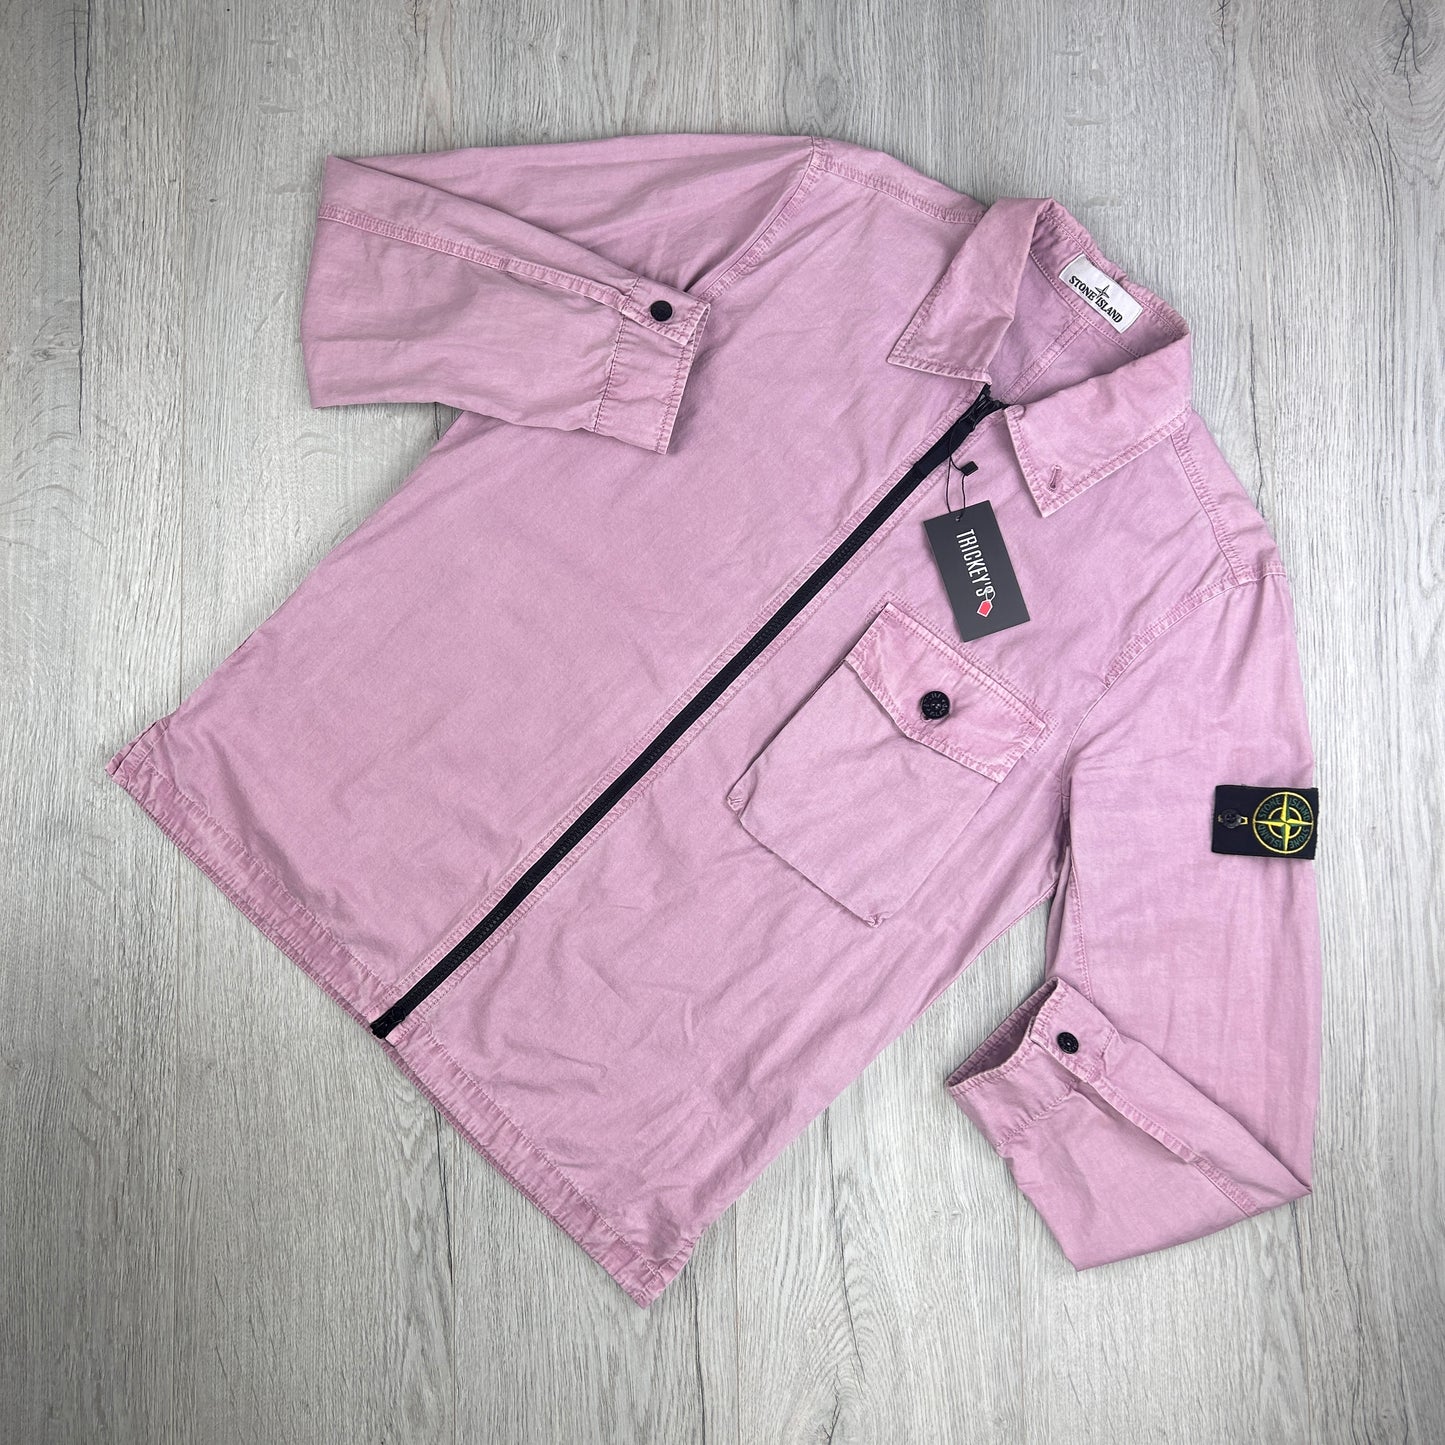 Stone Island Men’s Pink Zip-up Overshirt - Medium